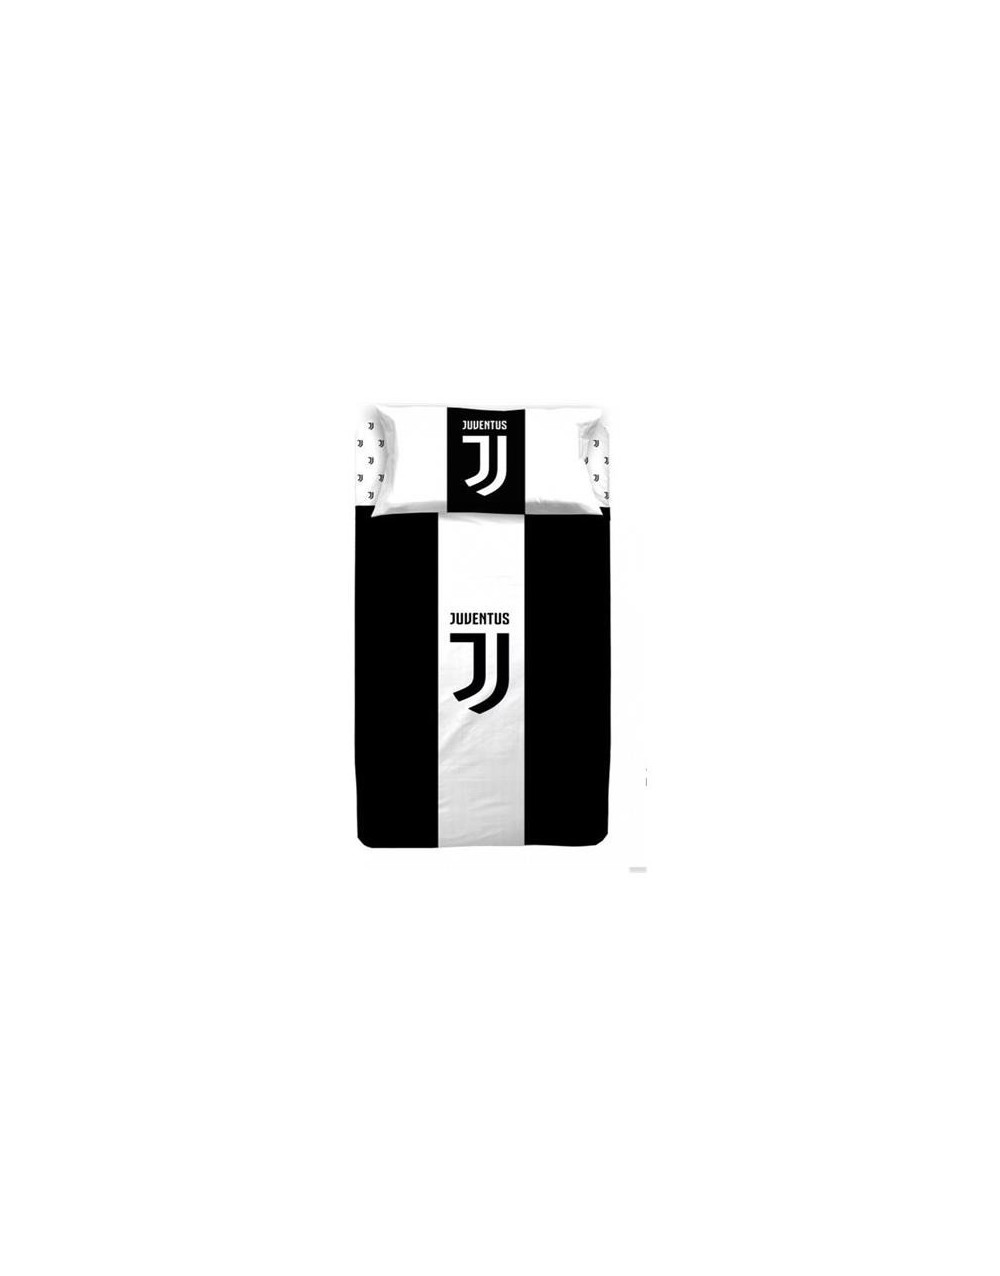 Juventus Completo Letto Singolo Hermet Lenzuola Letto Singolo 1 Piazza Juve  Bianco Nero Set Letto 1 Lenzuolo Sopra +1 Lenzuolo Sotto +1 Federa 